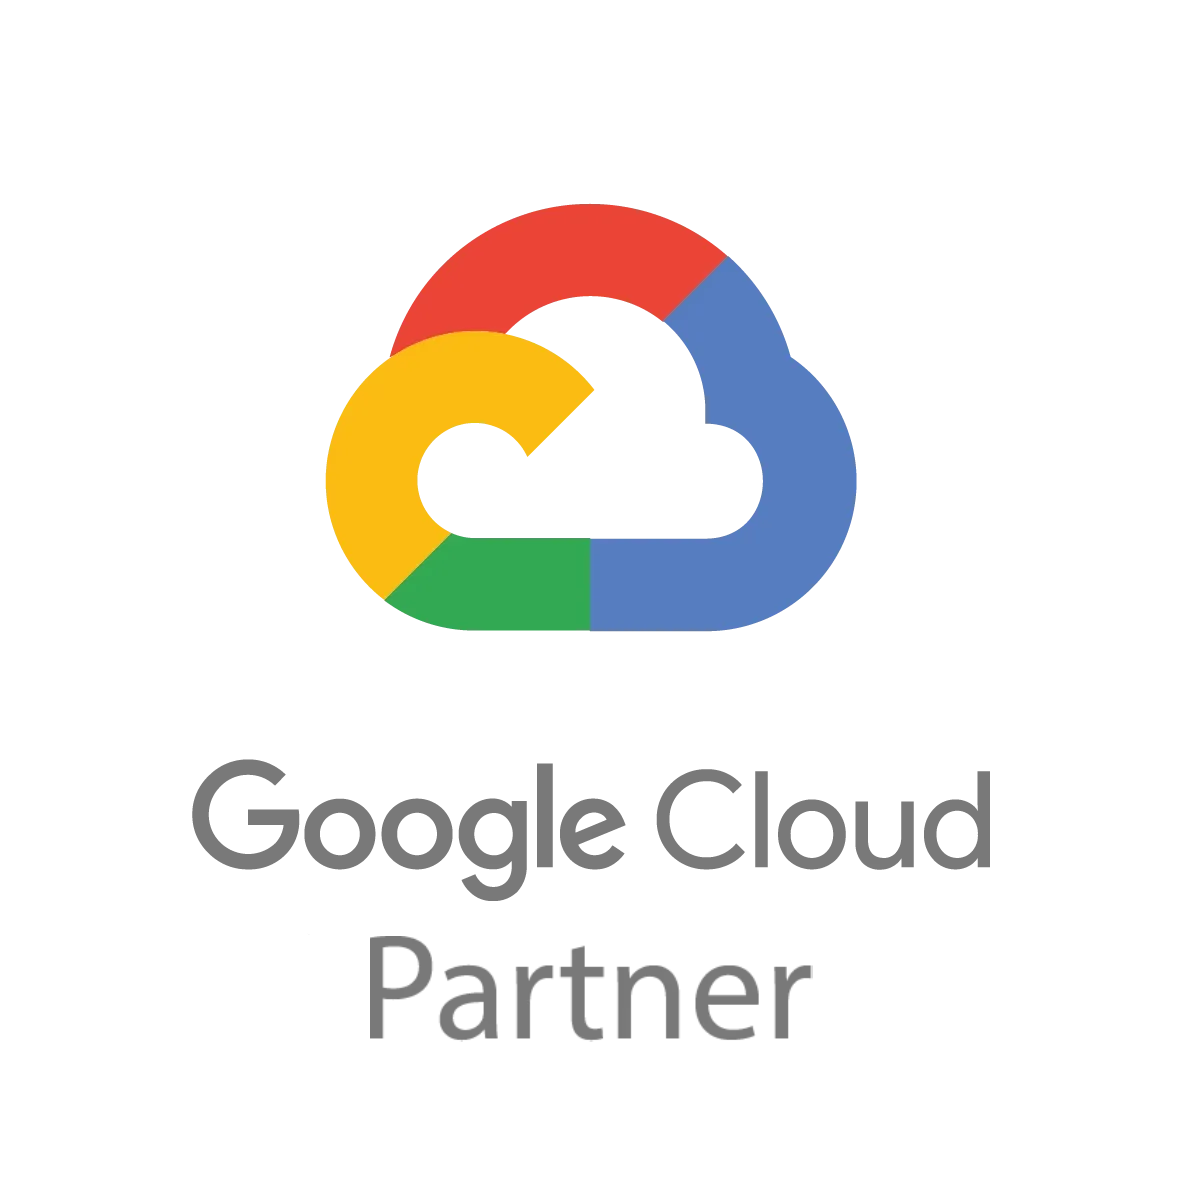 

Bright electric-blue circle logo shows Google Cloud Partner's brand.